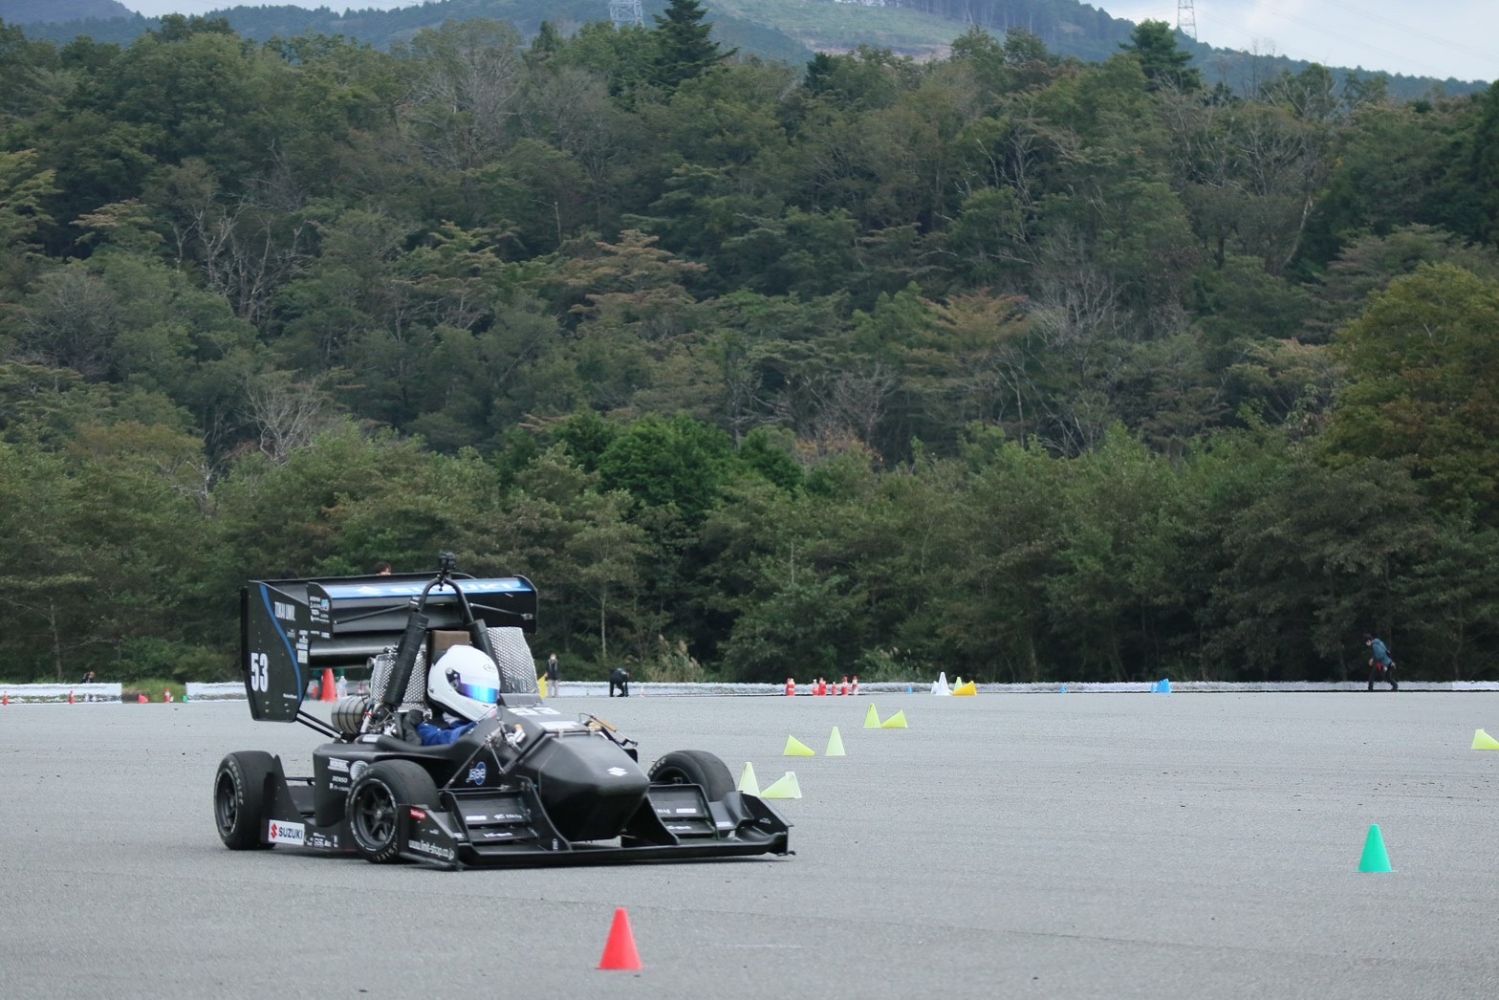 Tokai Formula Club